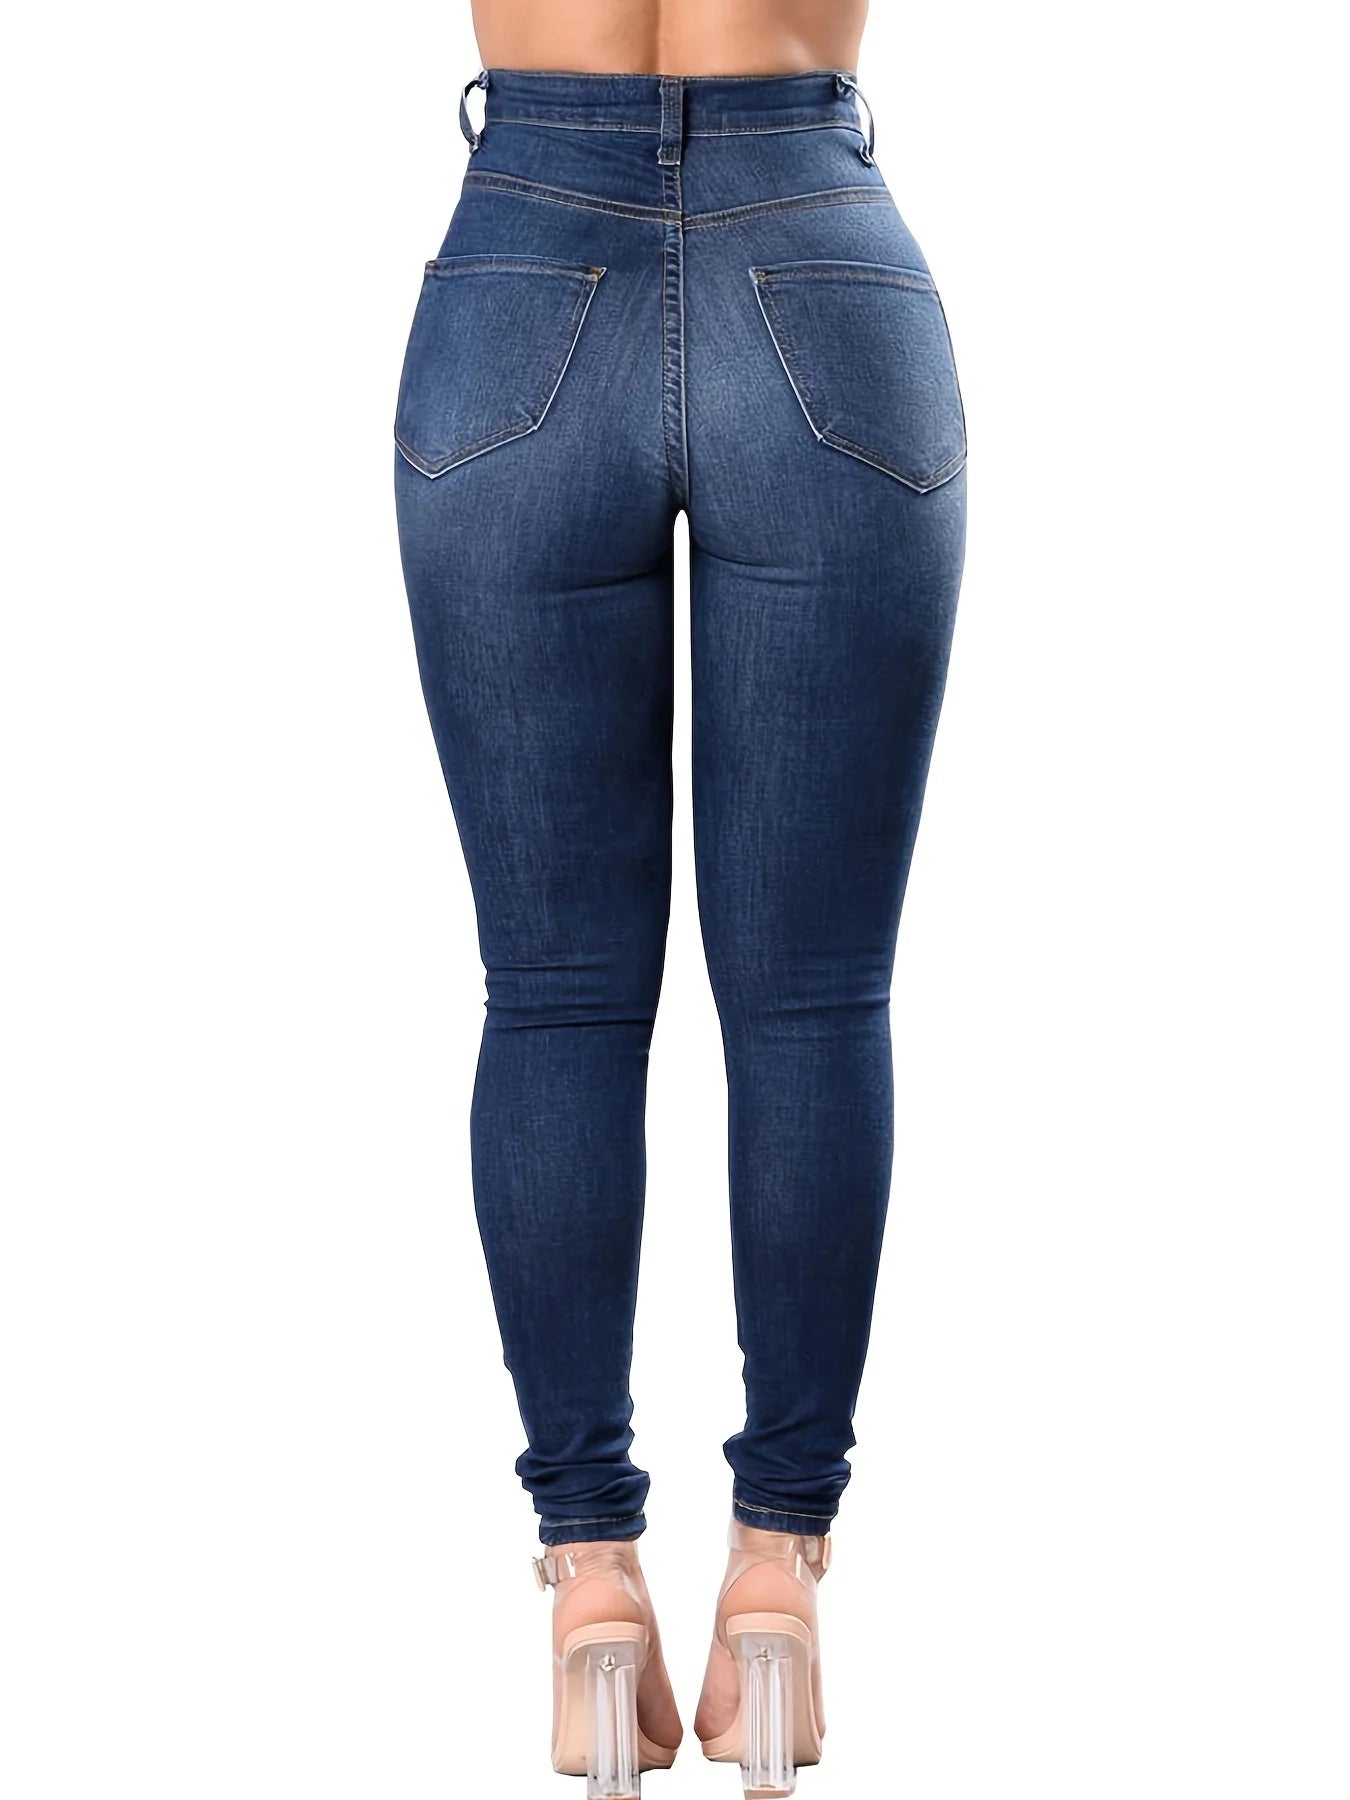 Blue Ripped Holes Skinny Jeans, Distressed High Waist Slim Fit Slash Pockets Denim Pants, Women's Denim Jeans & Clothing